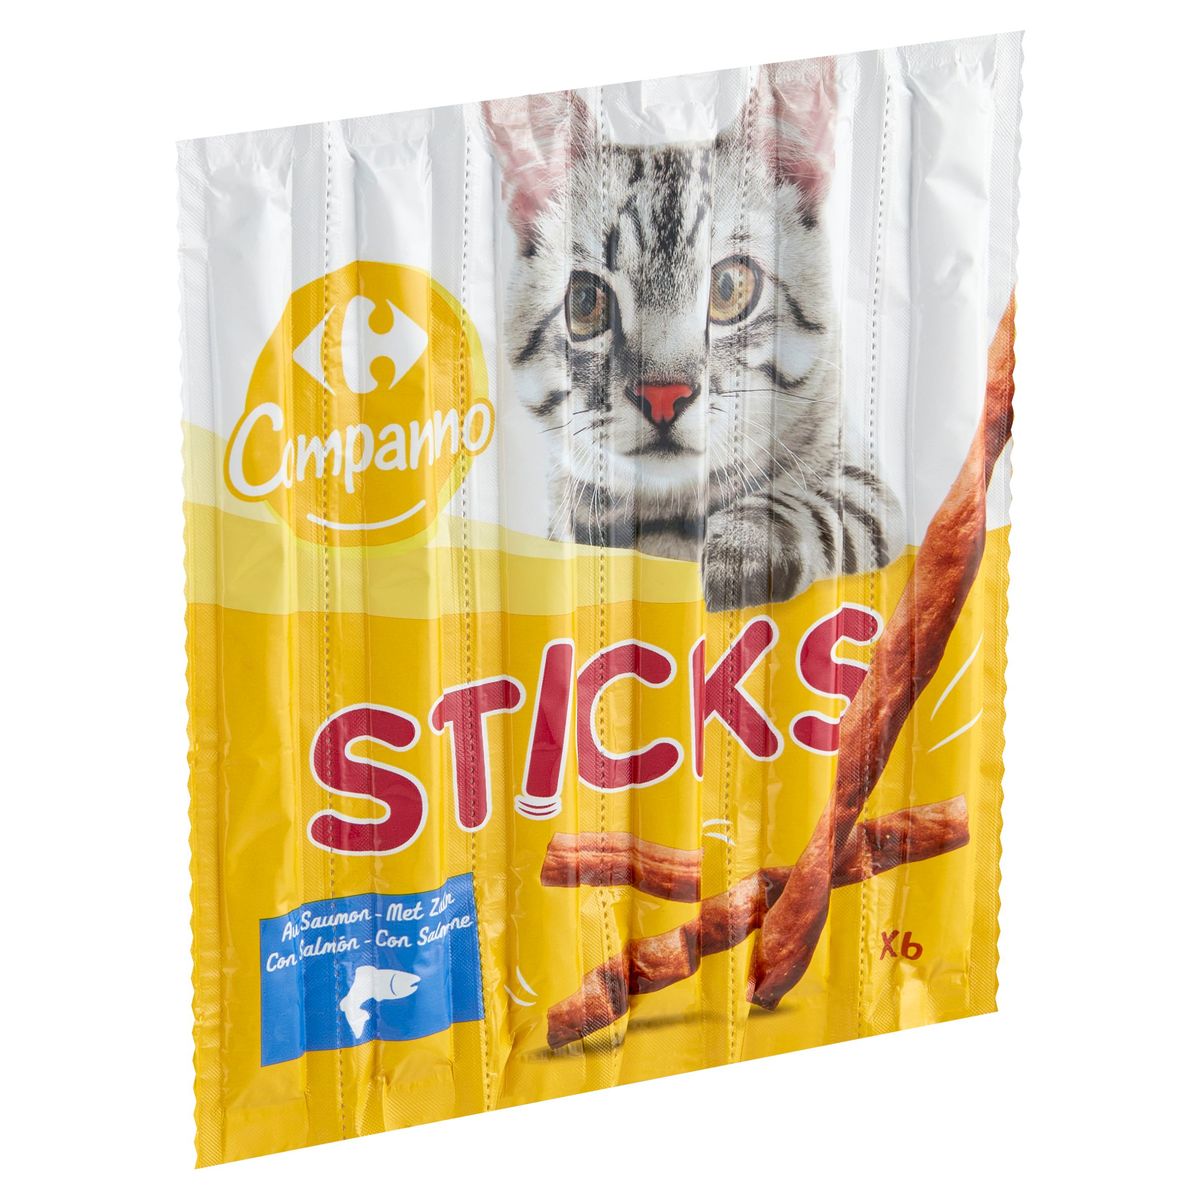 Carrefour Companino Sticks met Zalm 6 x 5 g